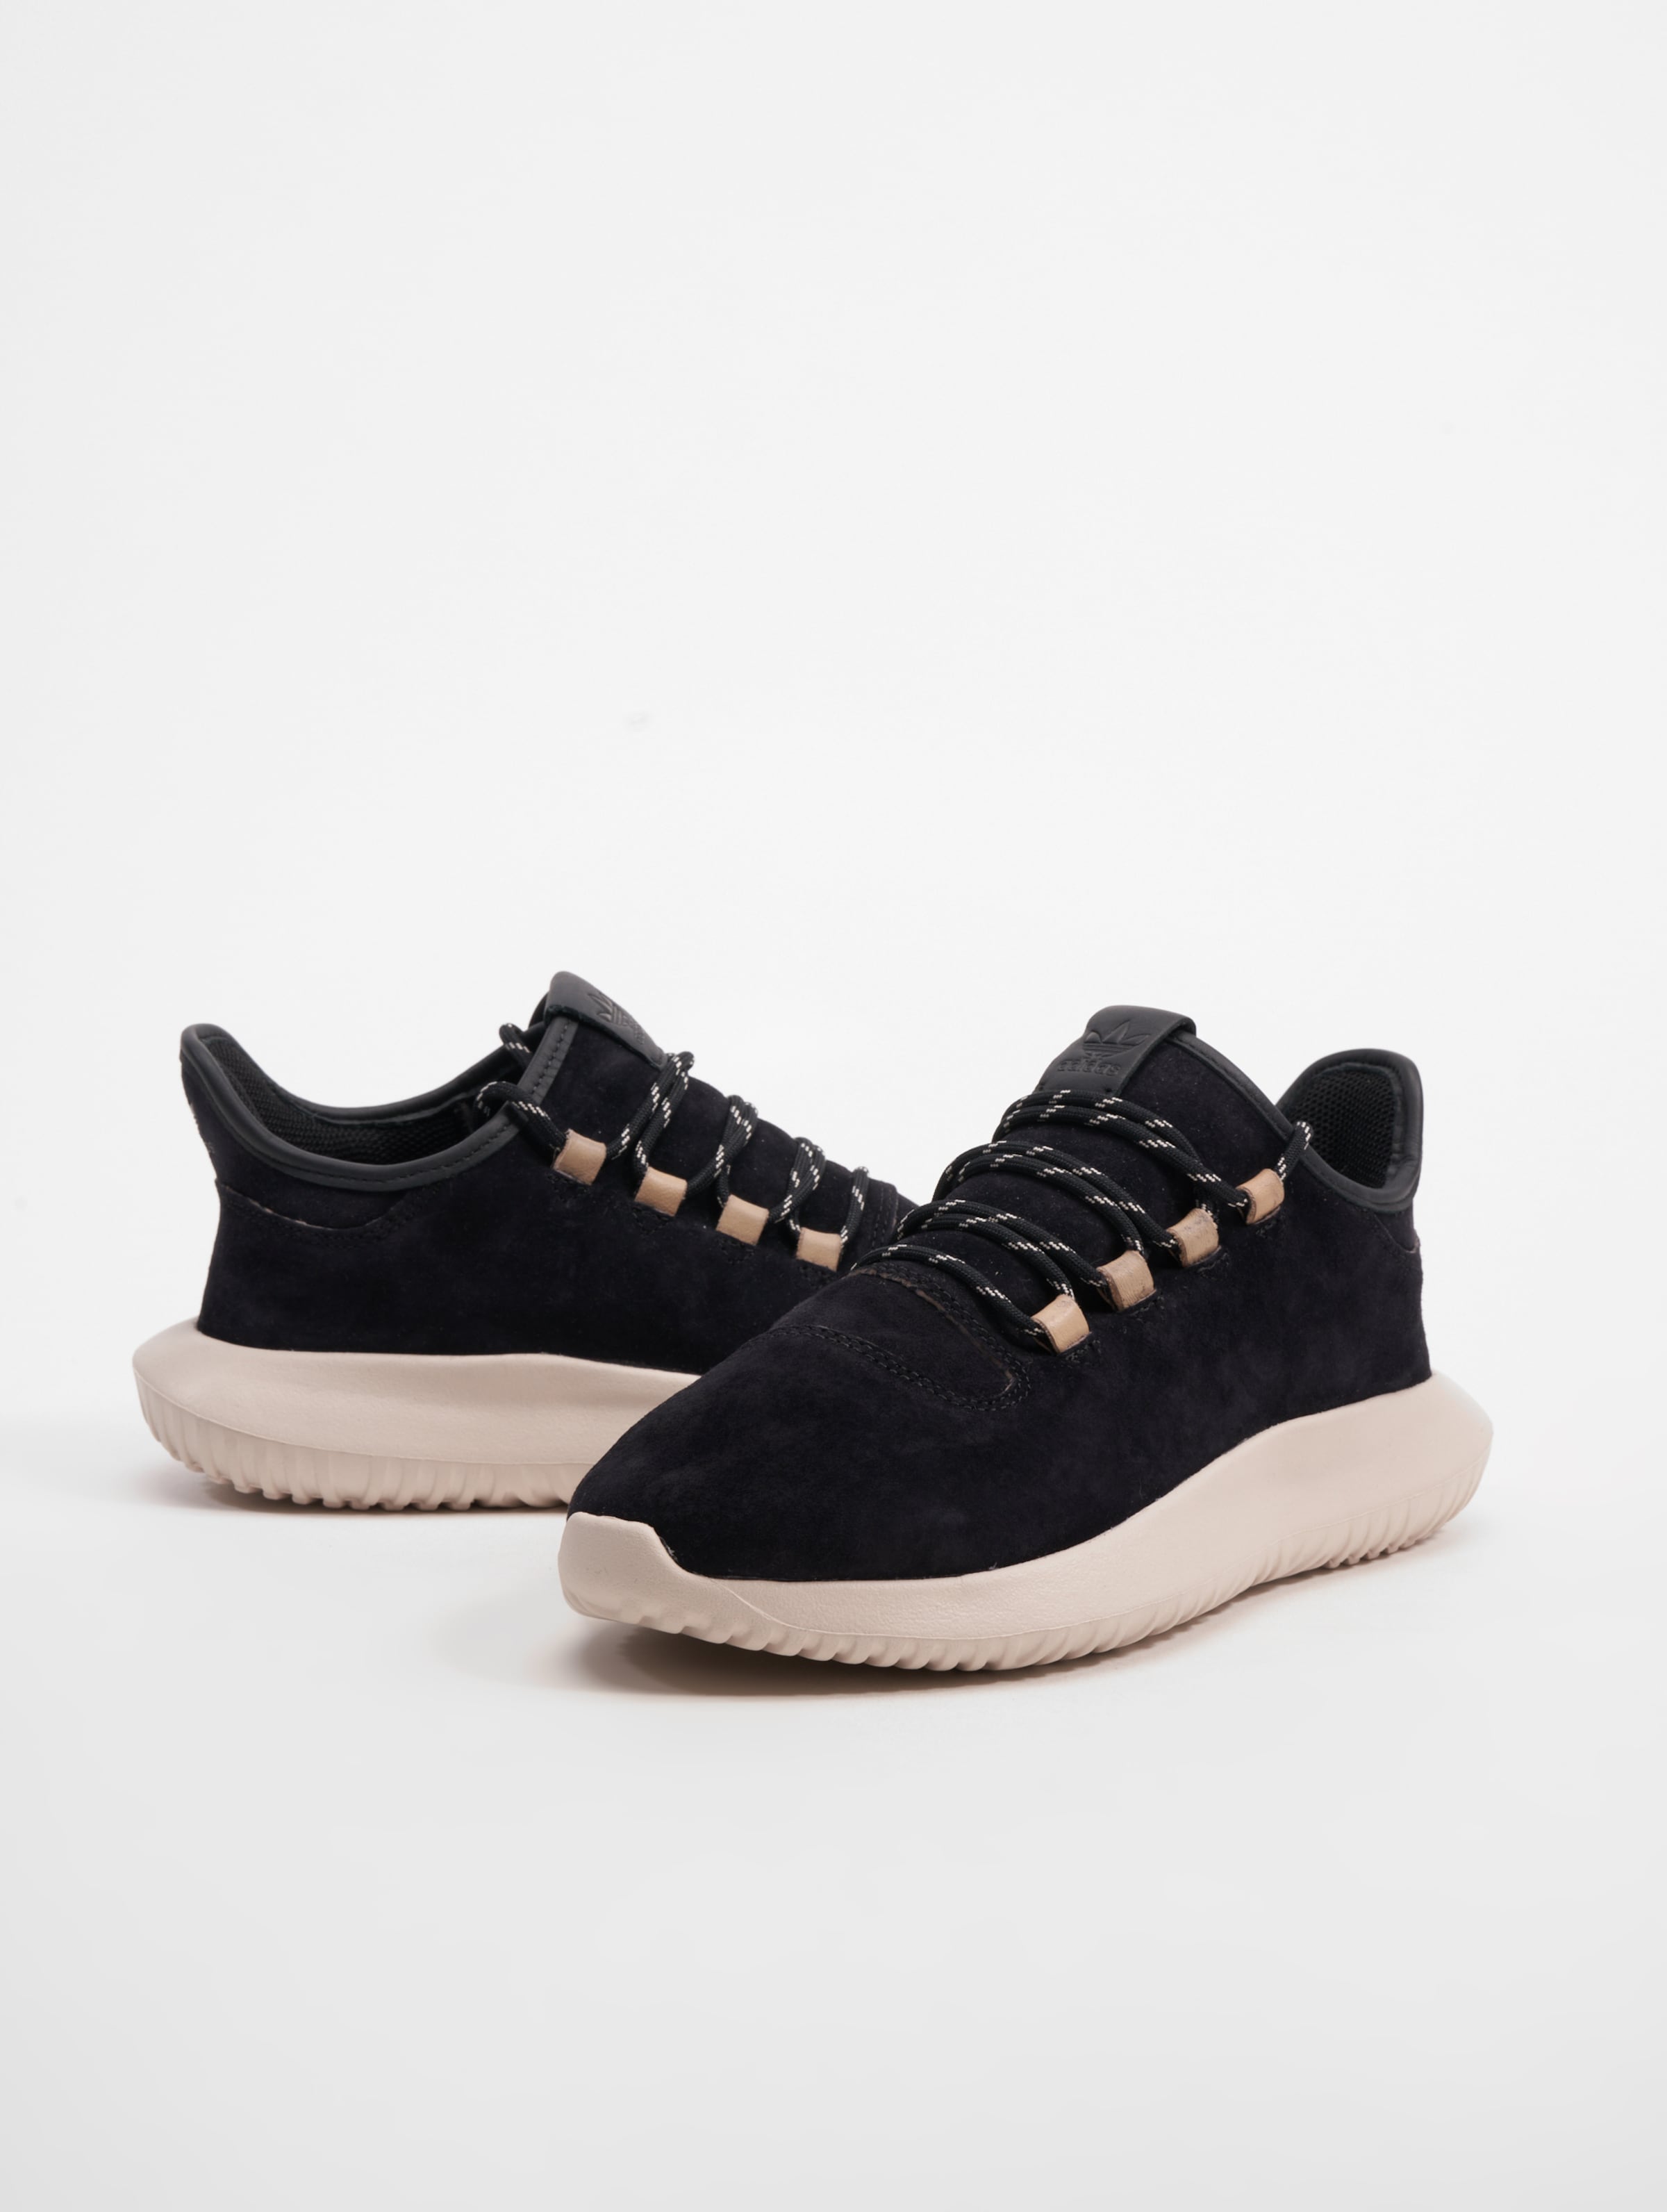 adidas Originals Tubular Shadow Schuhe Frauen,Unisex op kleur zwart, Maat 36 2/3